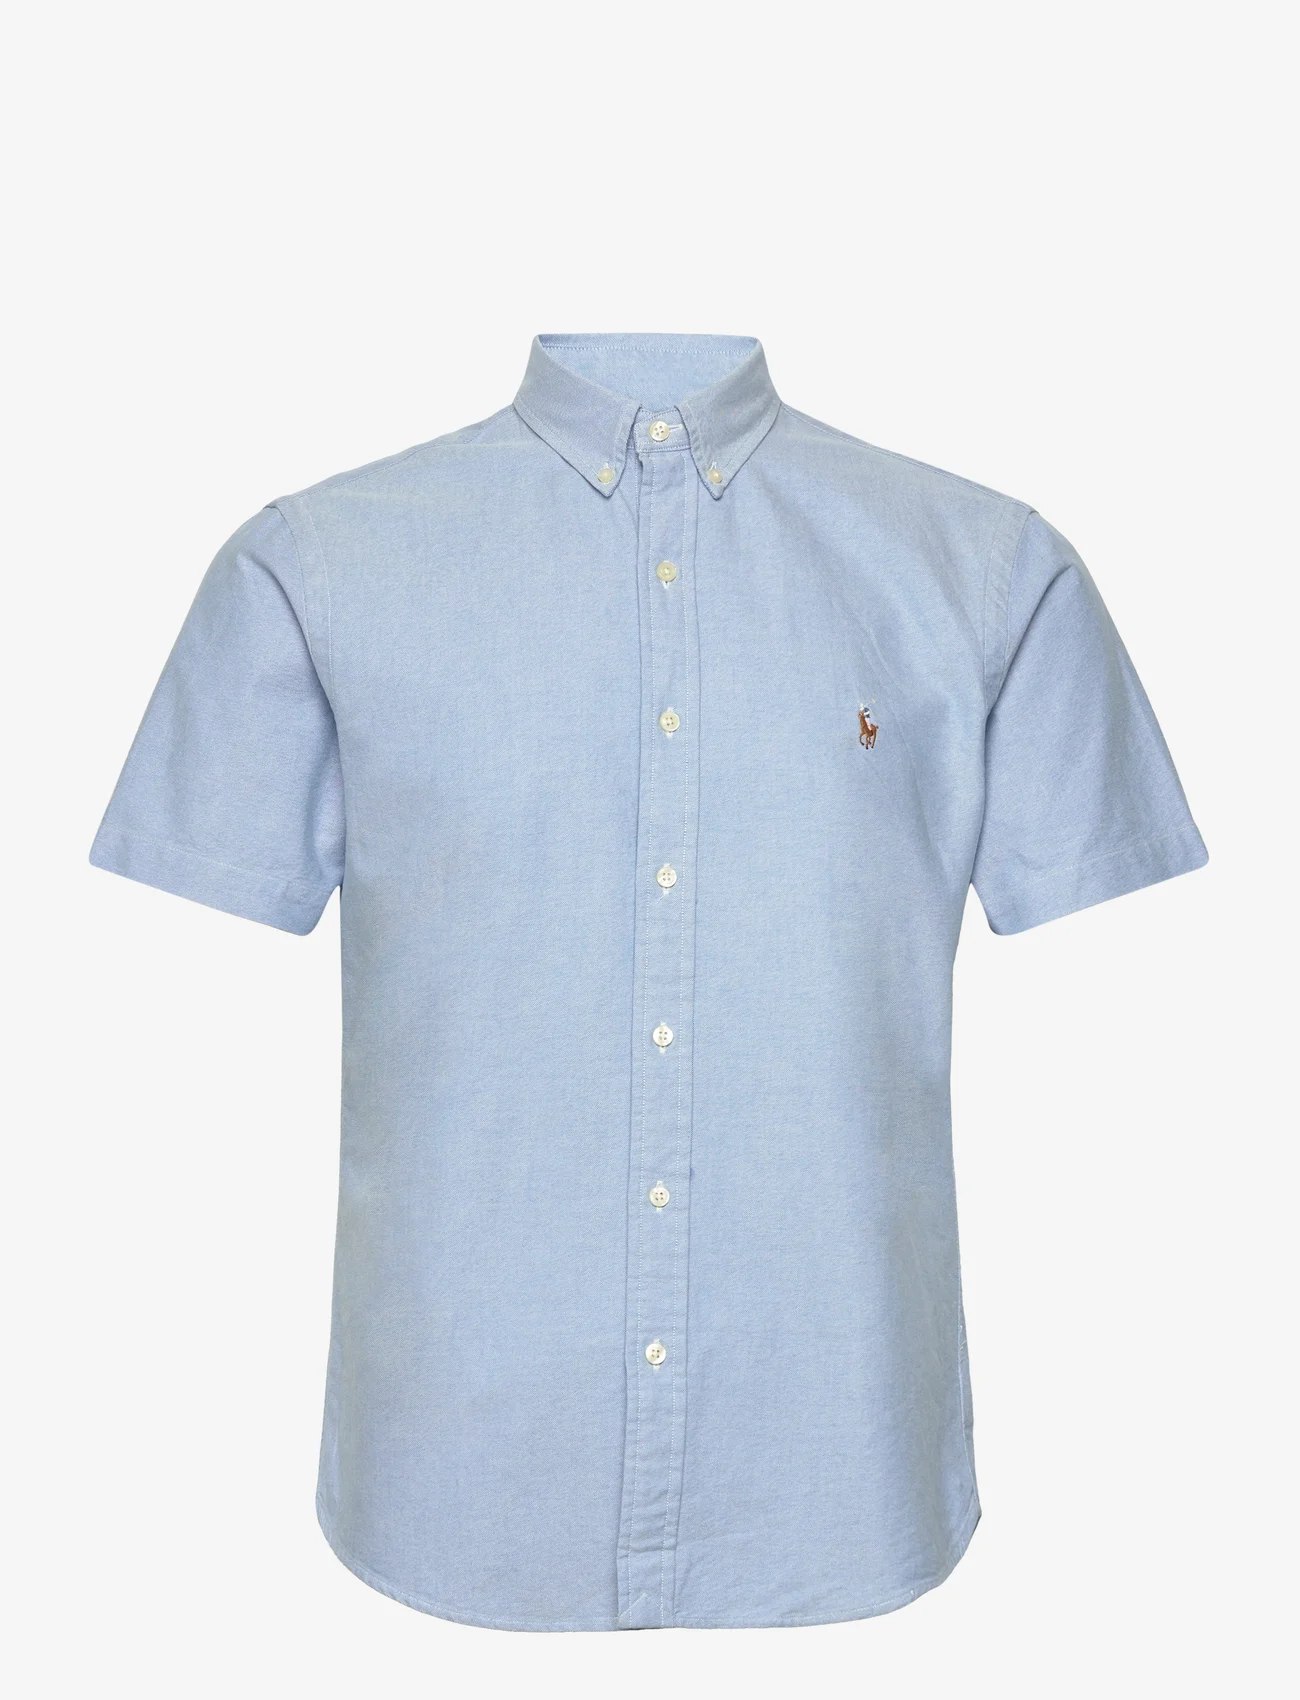 Polo Ralph Lauren - Slim Fit Oxford Shirt - oxford-kauluspaidat - bsr blue - 1